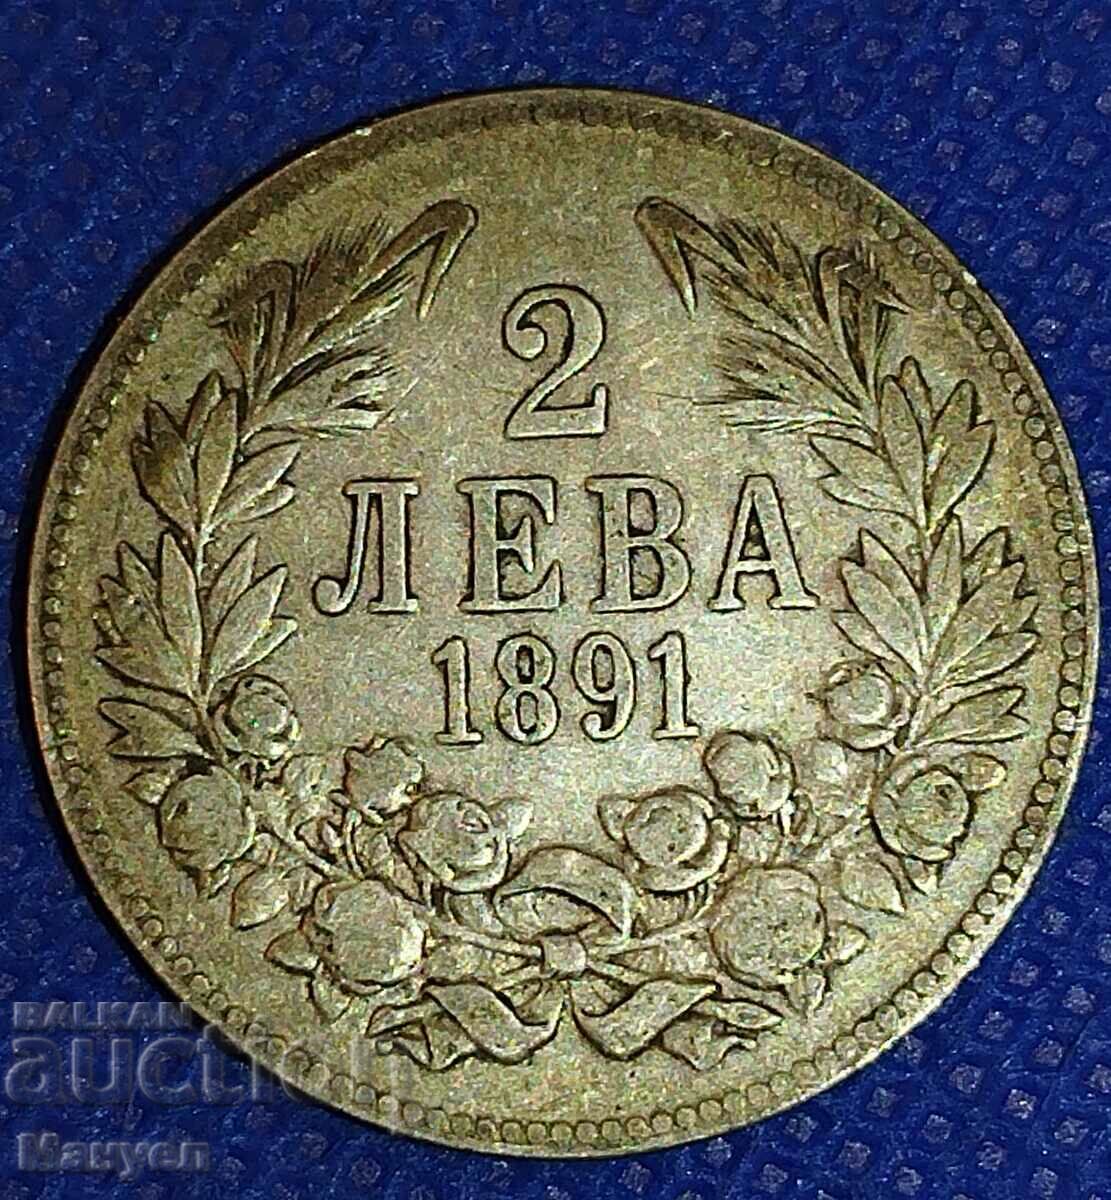 2 лева сребро -  1891 г.